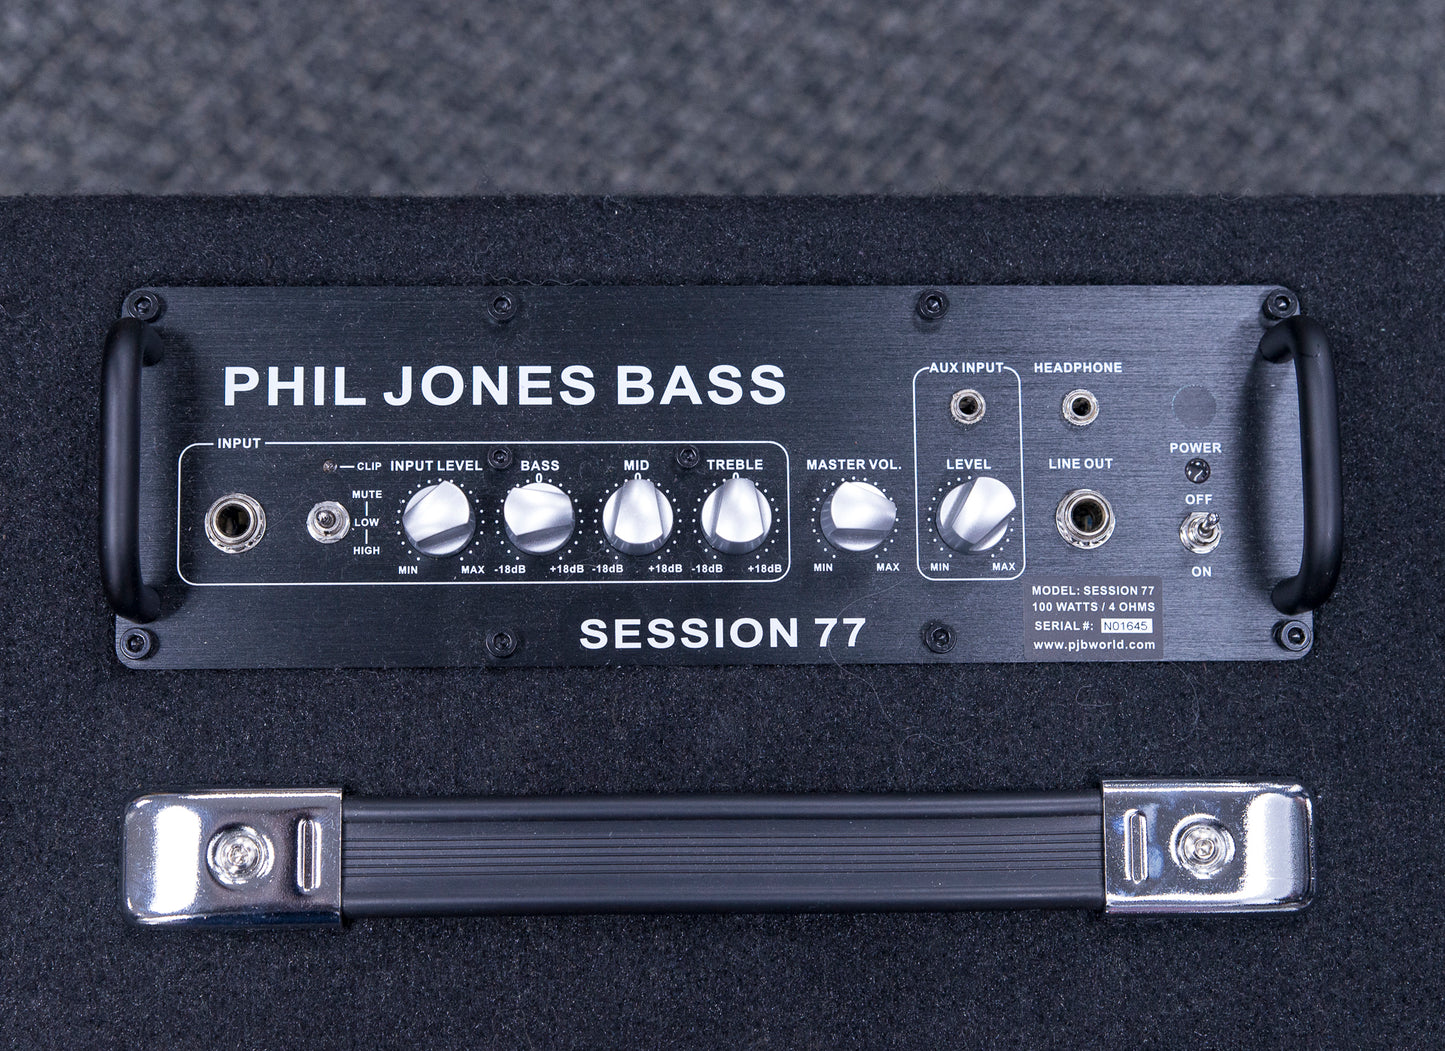 Phil Jones Bass Session 77 100W Combo Bass Amp Black